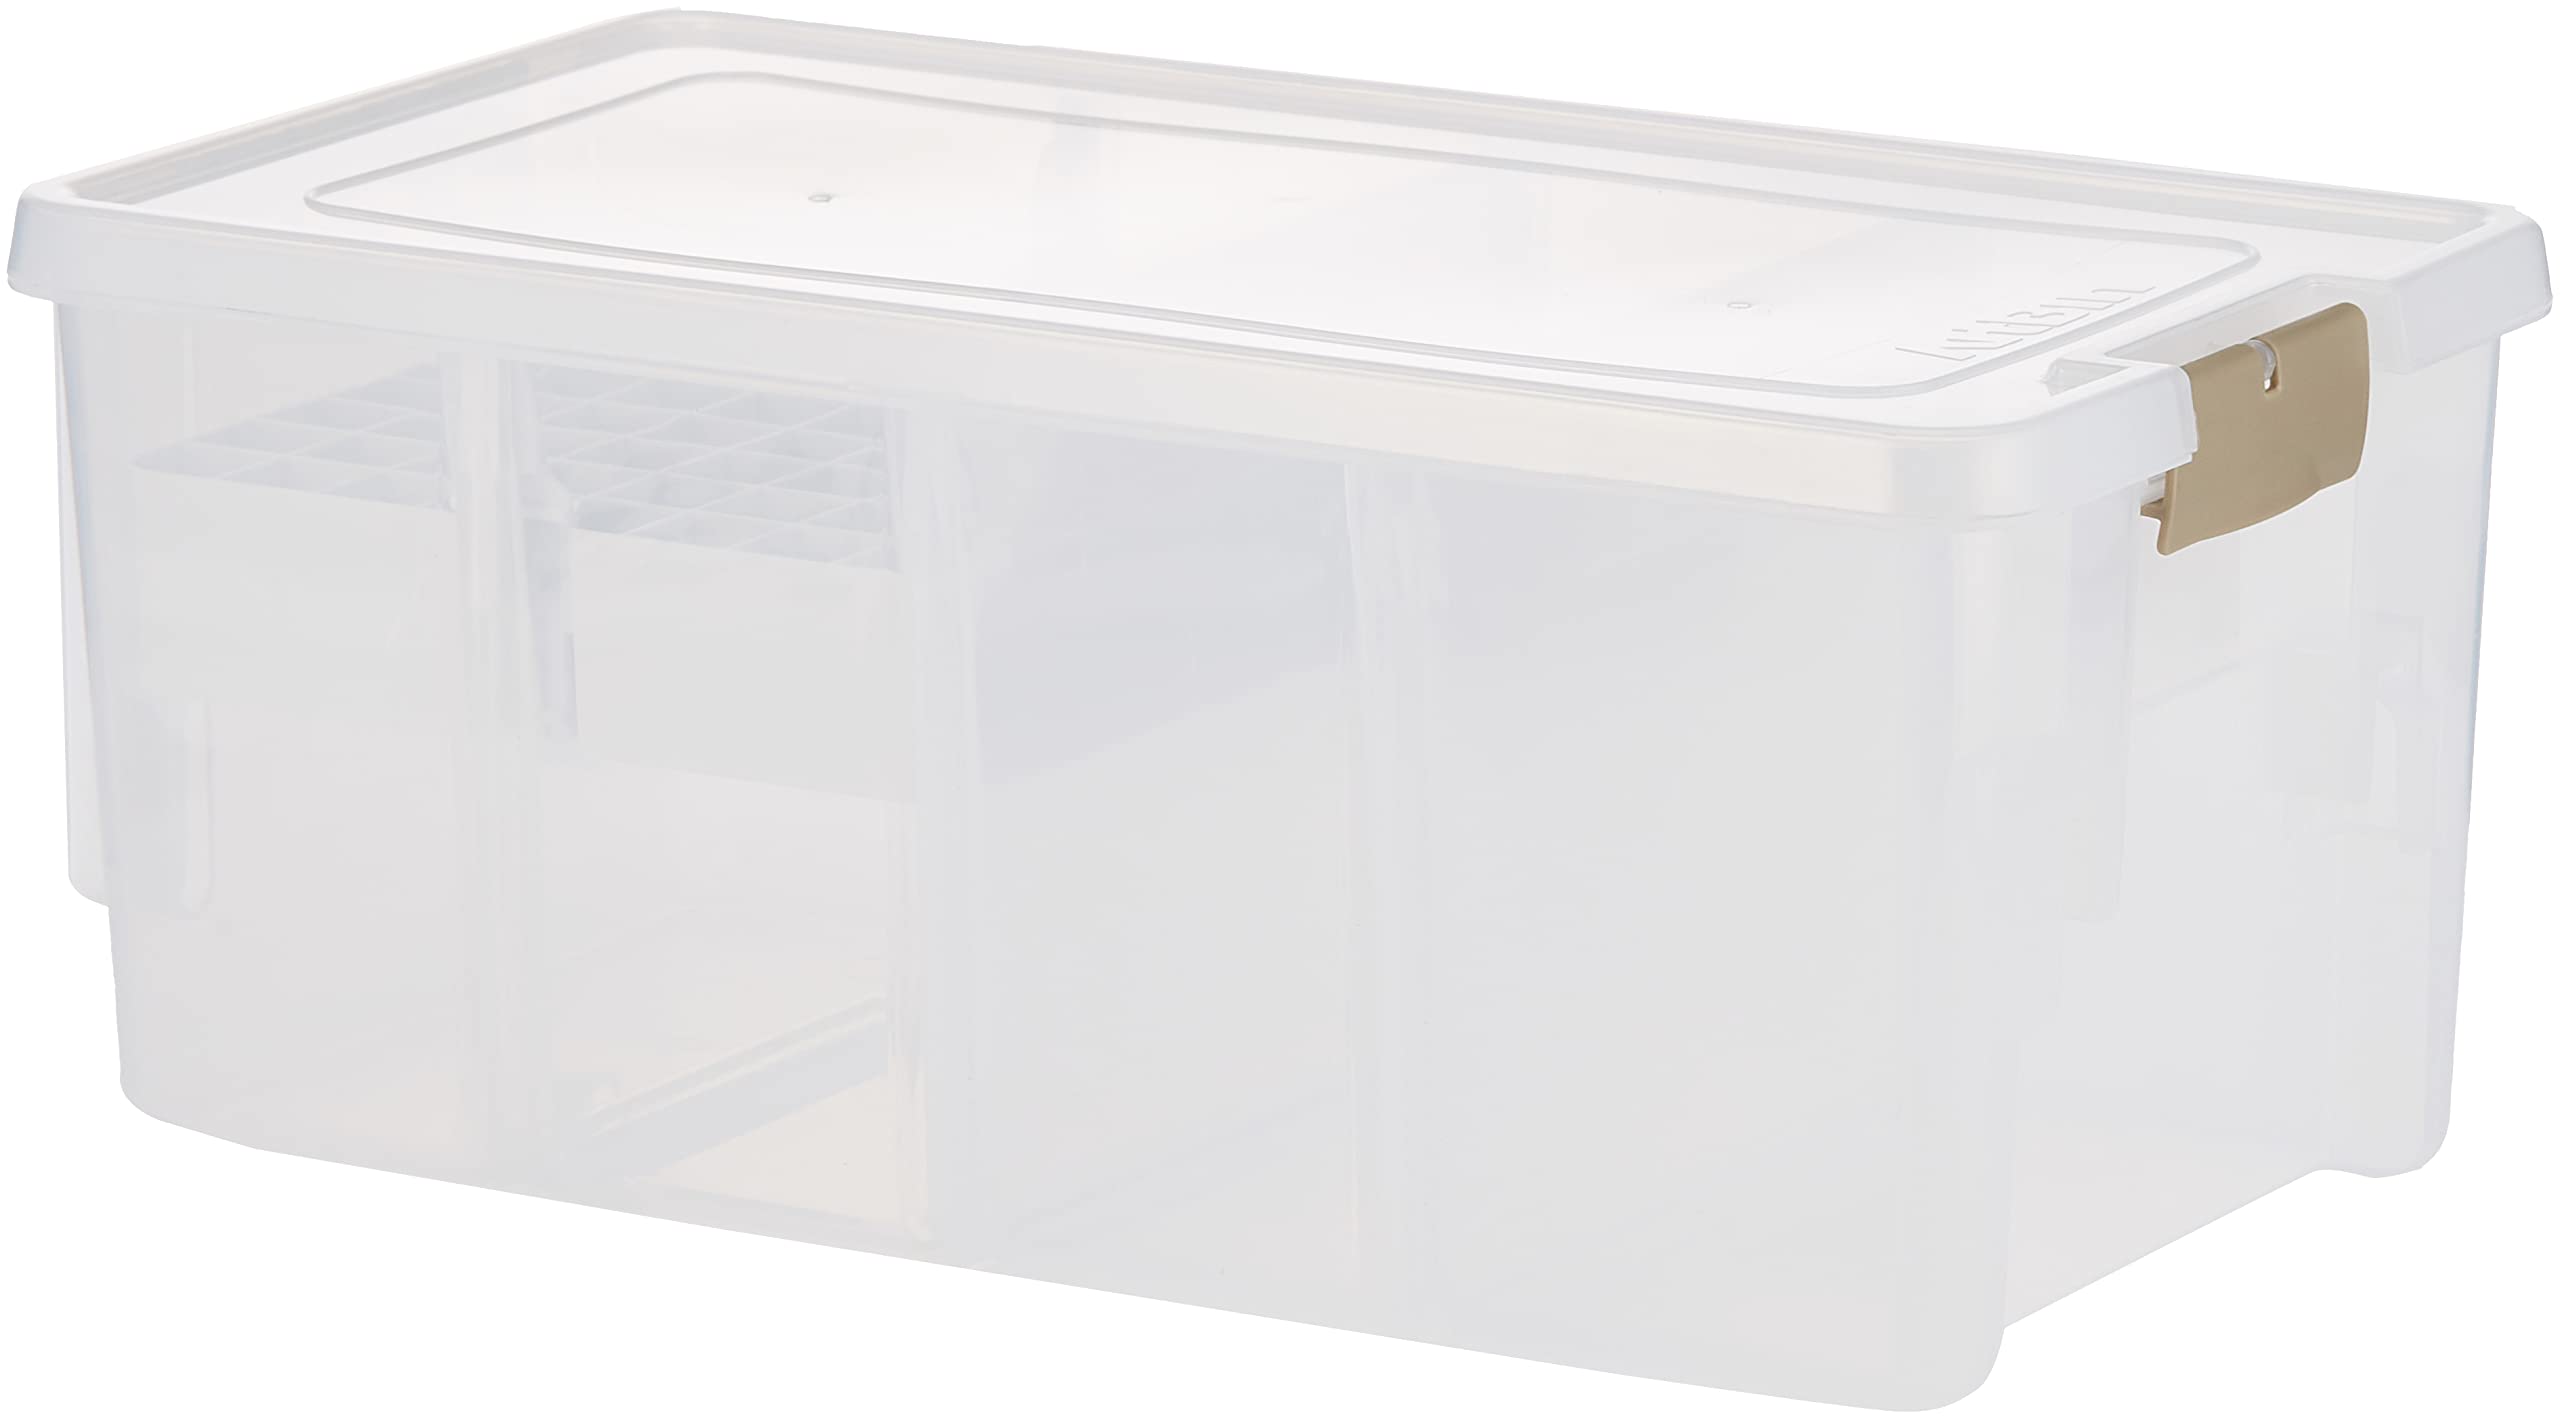 Artbin 1-Tray Storage Box